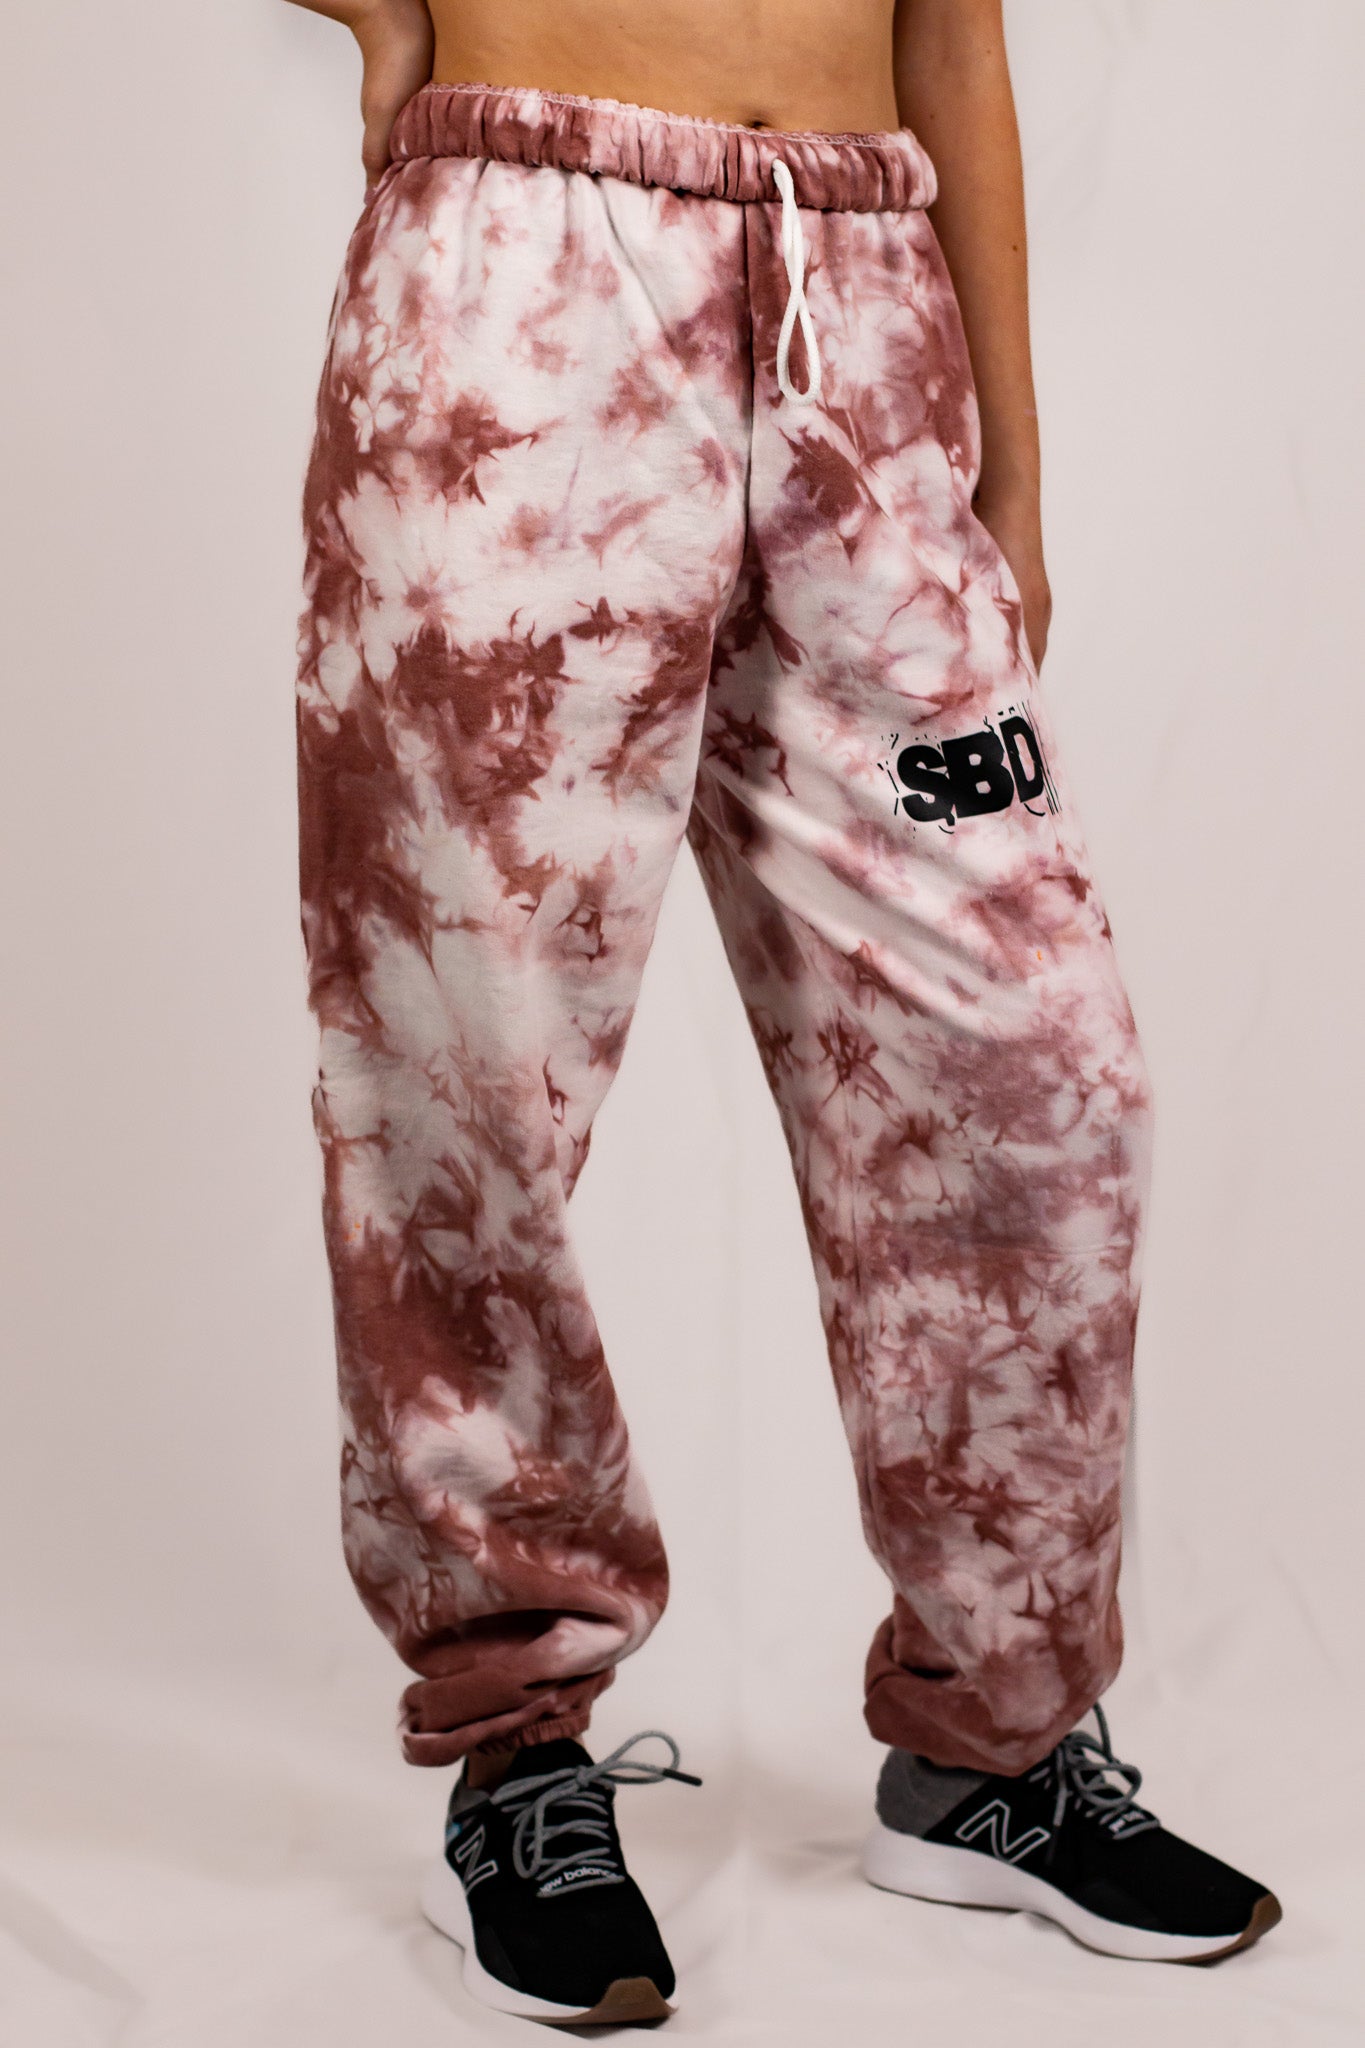 Unisex Mauve Pink Crystal Tie Dye Sweatpants (Matching Set)